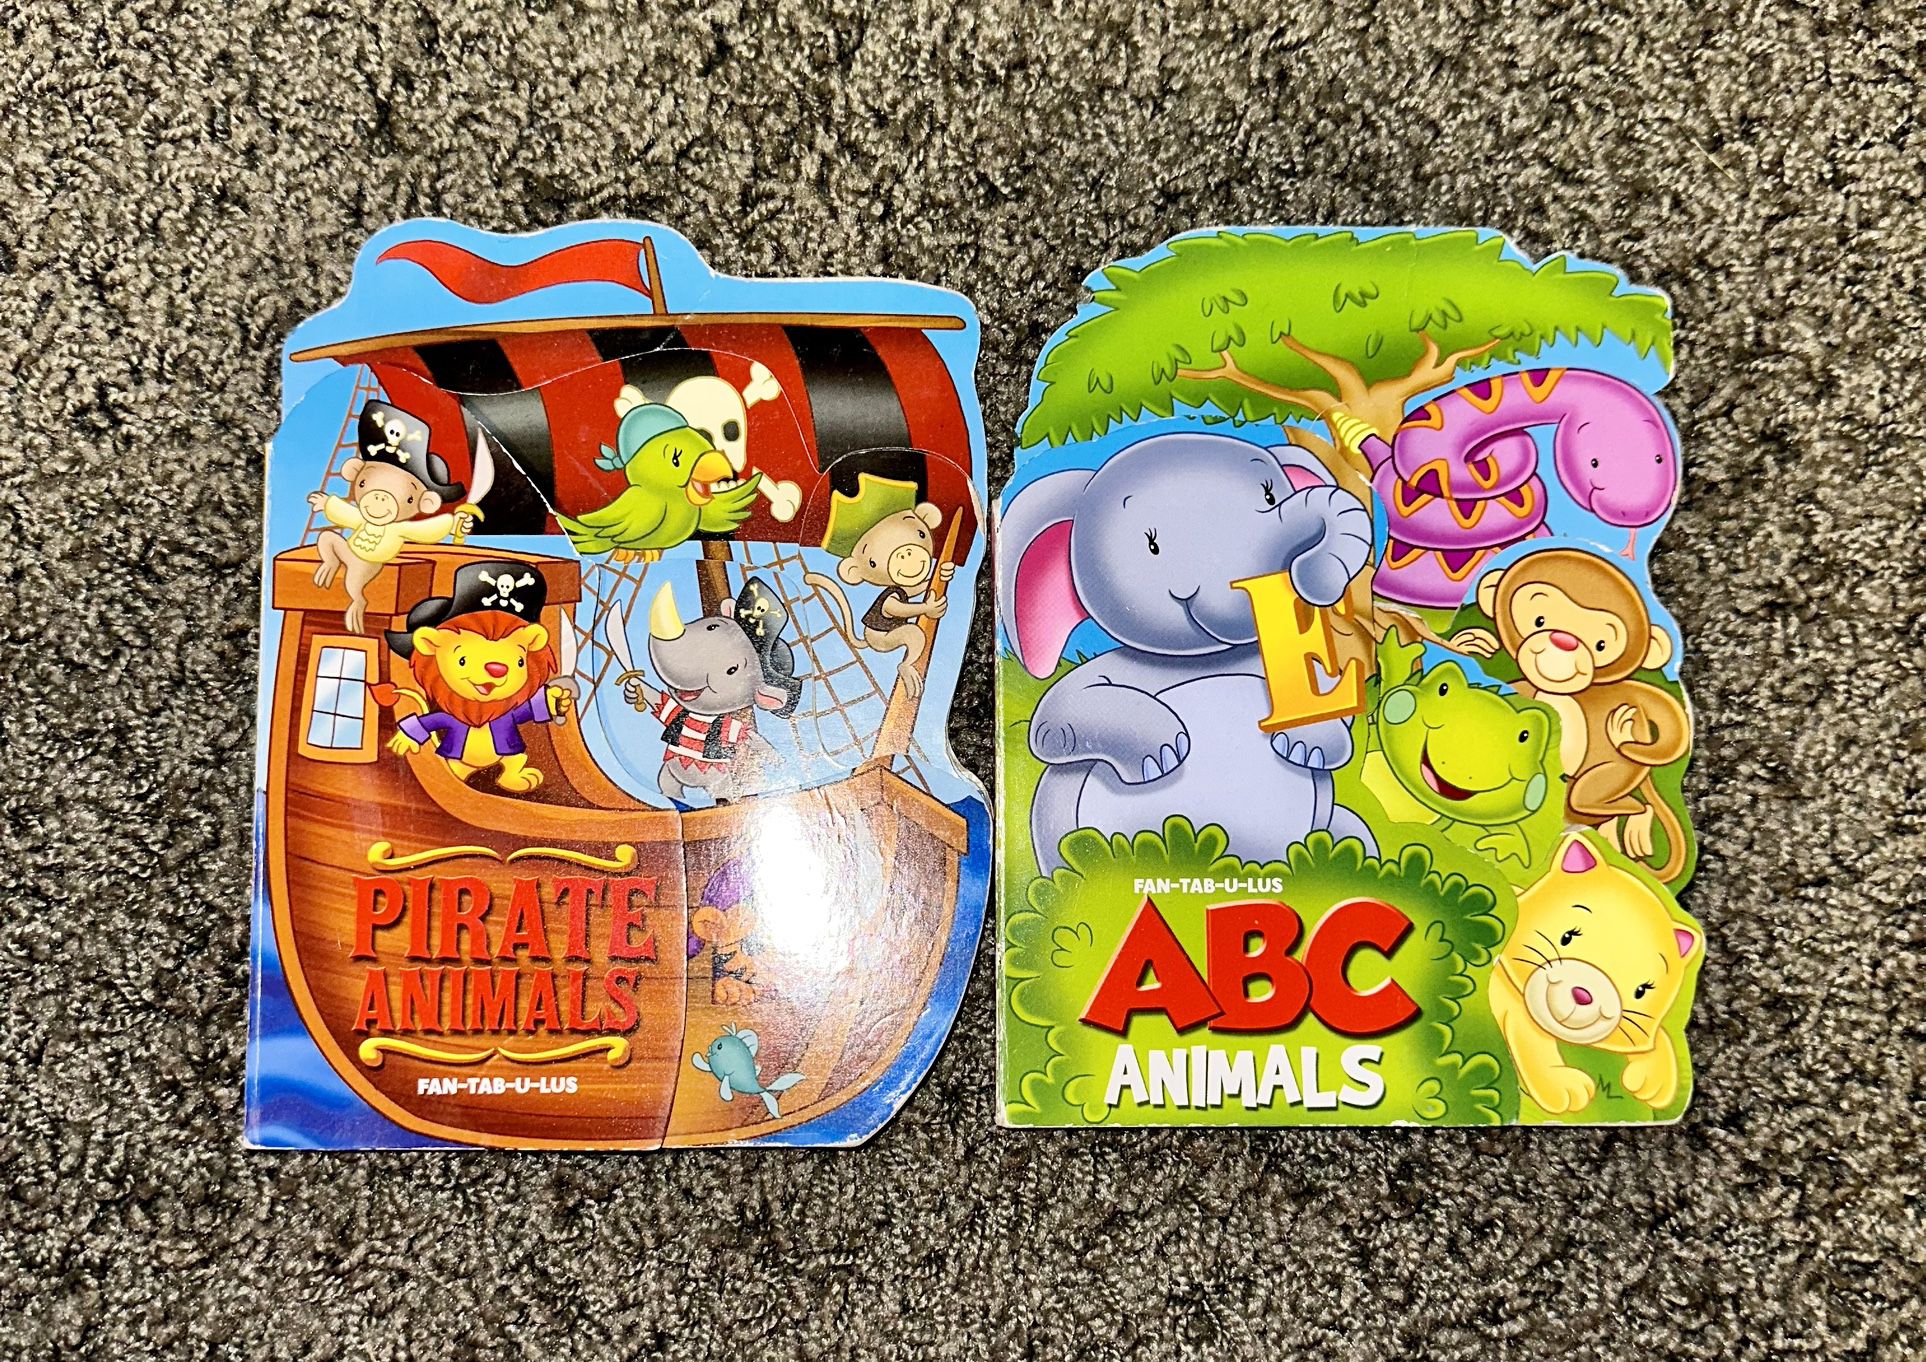 Pirate Animals & ABC Animals Books 